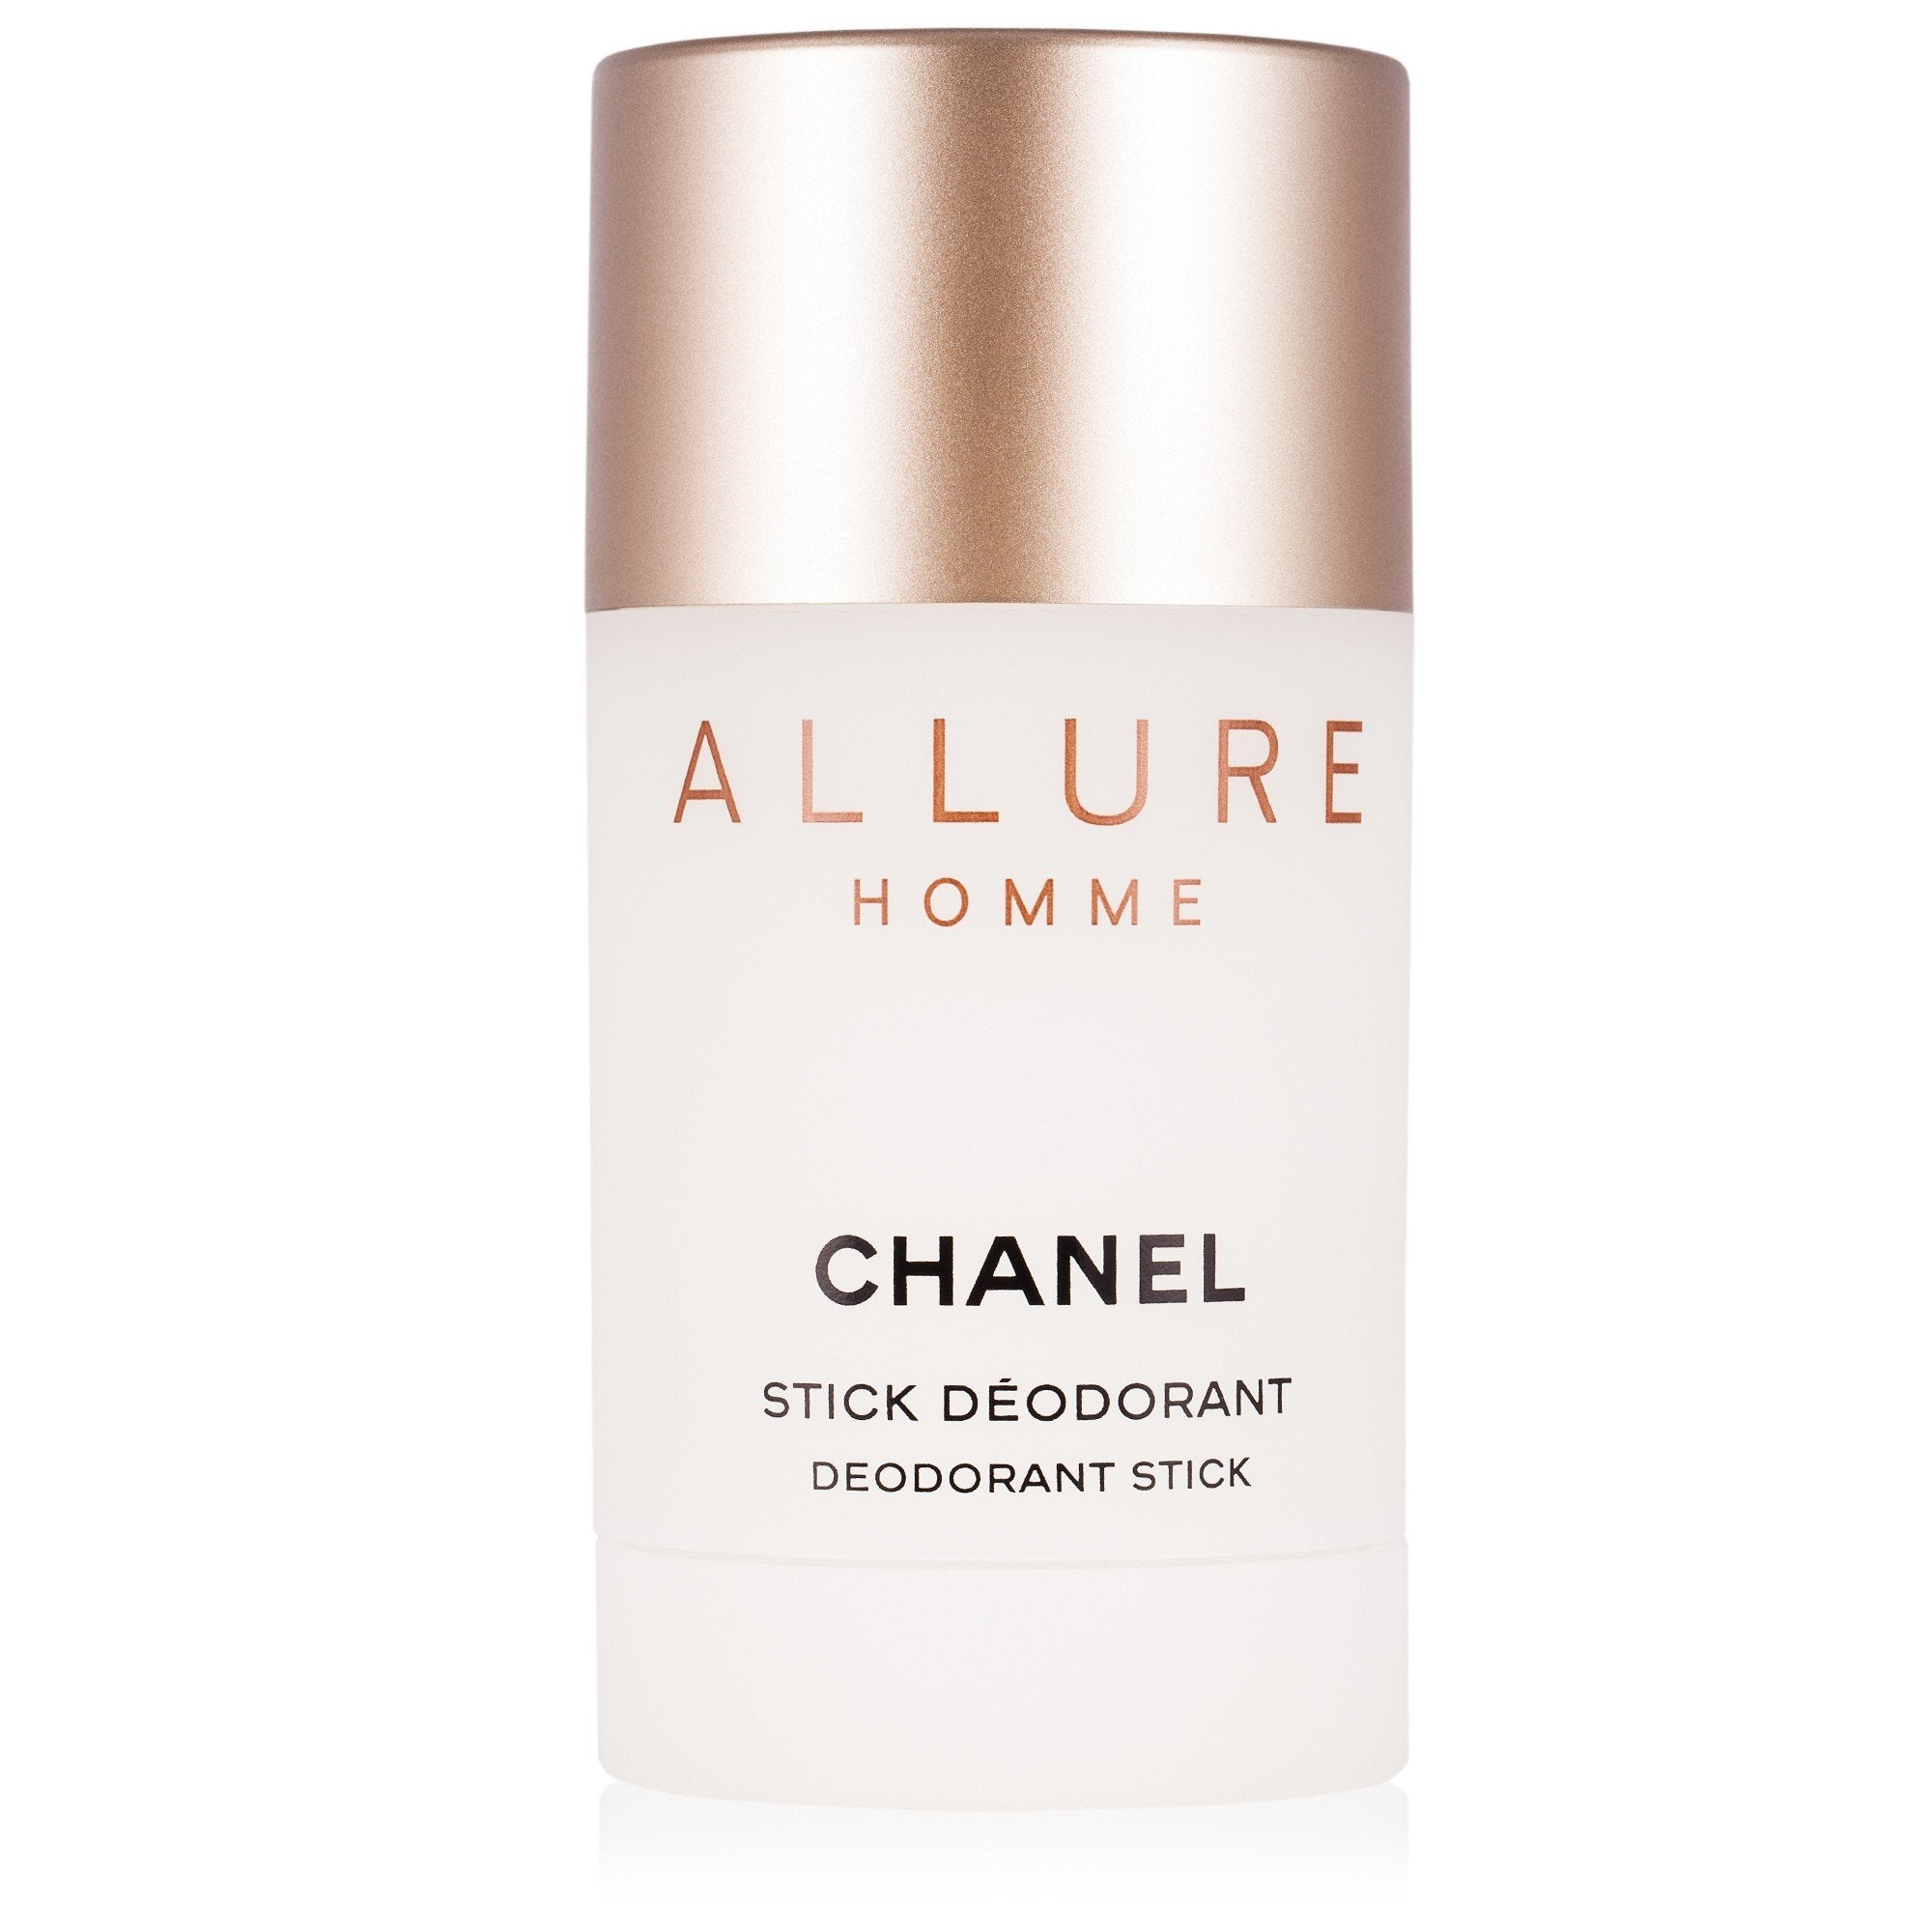 Chanel Allure Homme Deodorant Stick | My Perfume Shop Australia